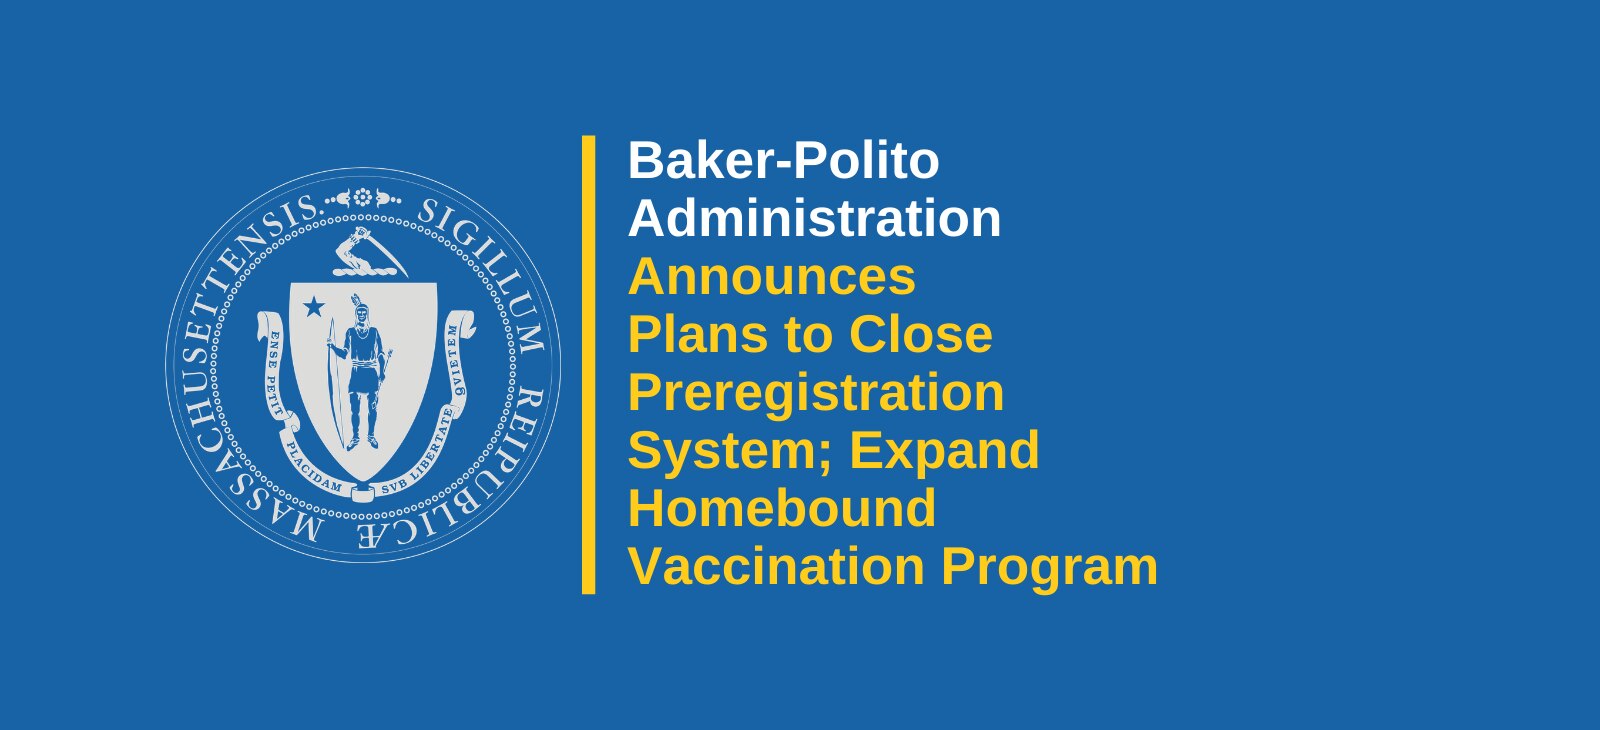 Baker-Polito Administration Announces Plans to Close Preregistration System; Expand Homebound Vaccination Program